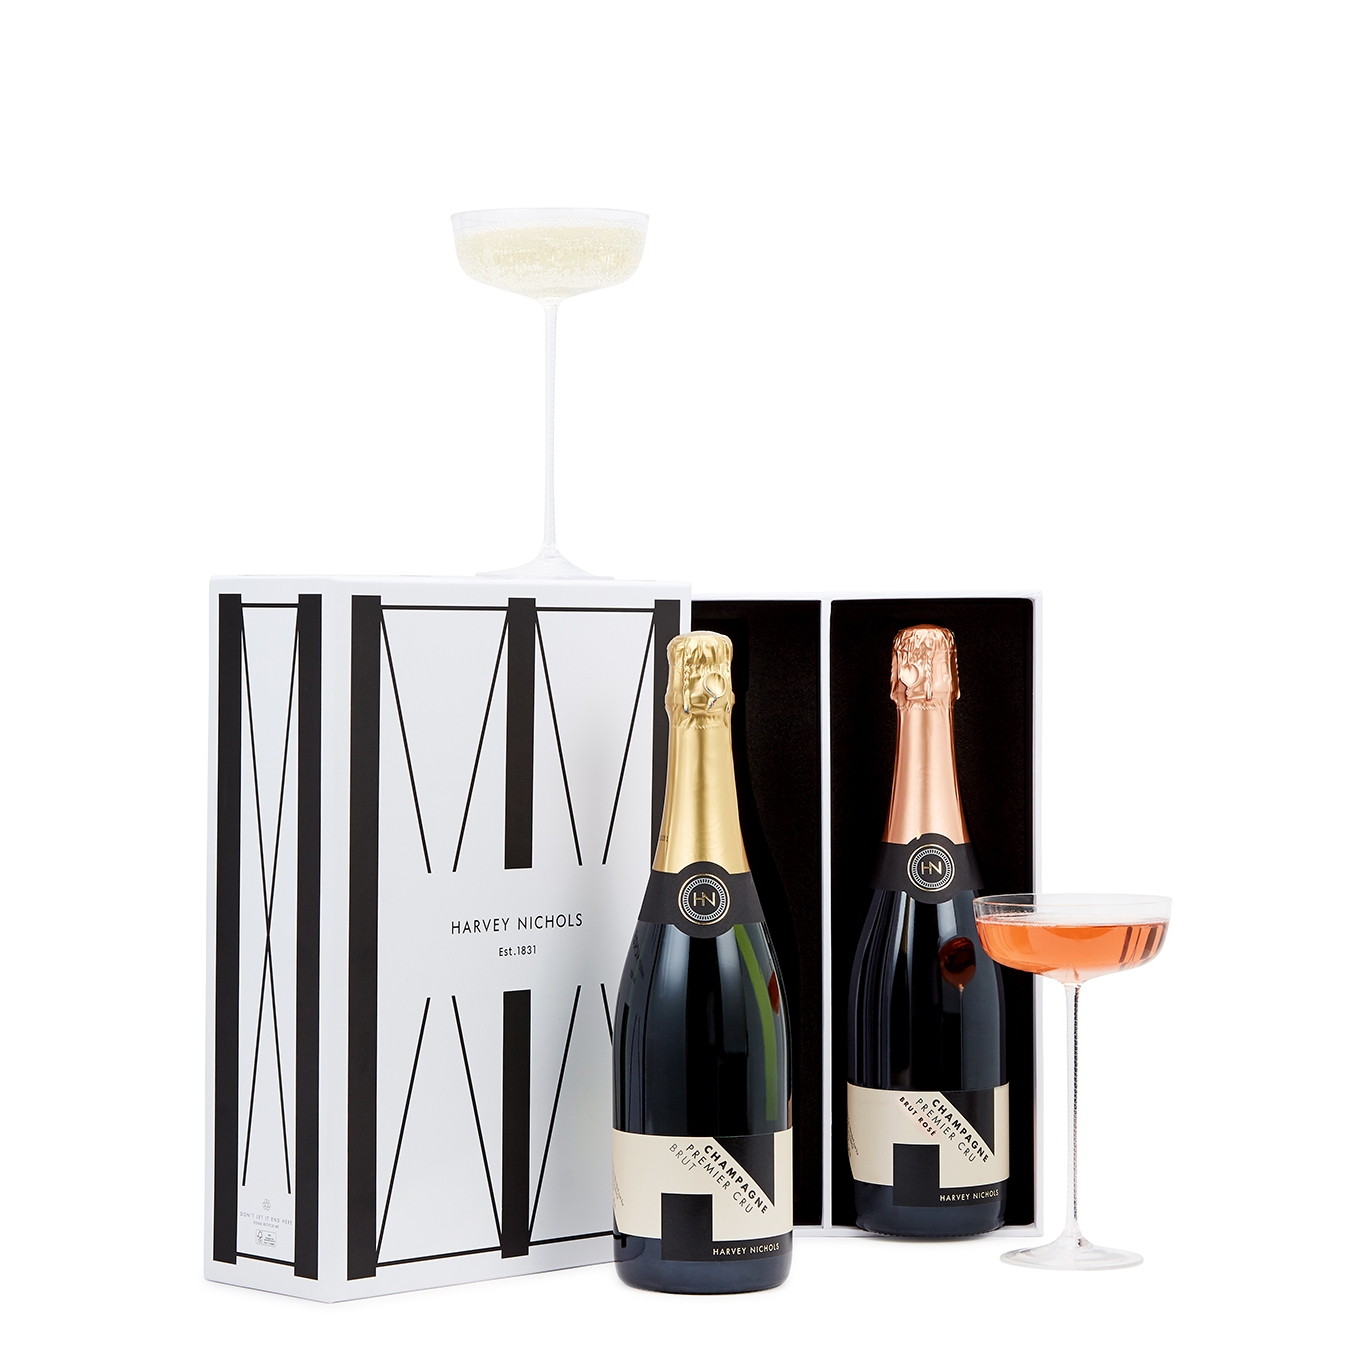 Harvey Nichols Champagne Duo Gift Box, Wine, Non-vintage Champagne Sparkling Wine